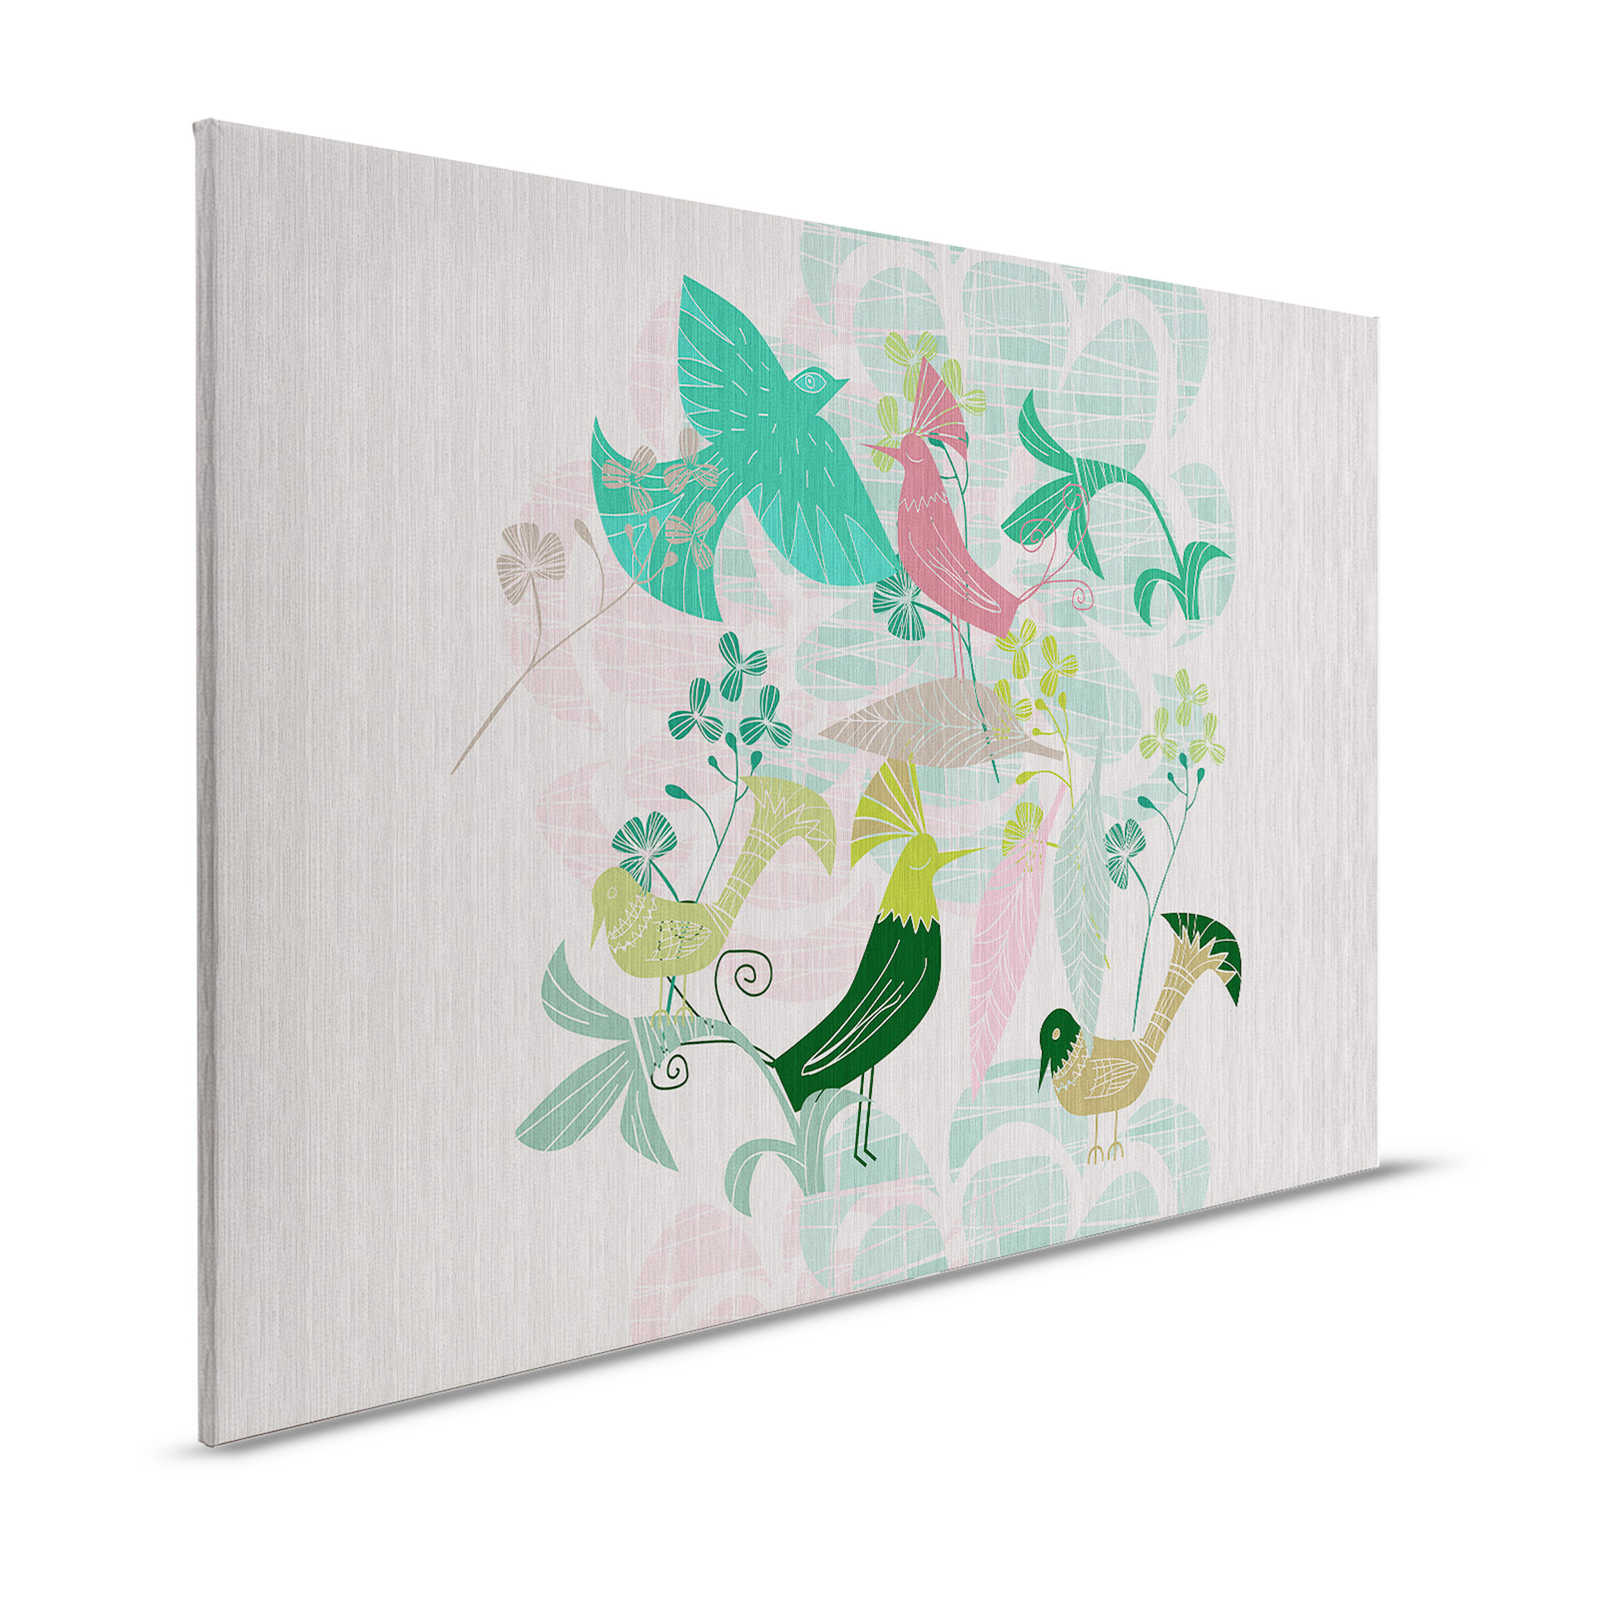 Birdland 3 - Canvas painting Green & Pink Birds Retro Style Pattern - 1,20 m x 0,80 m
